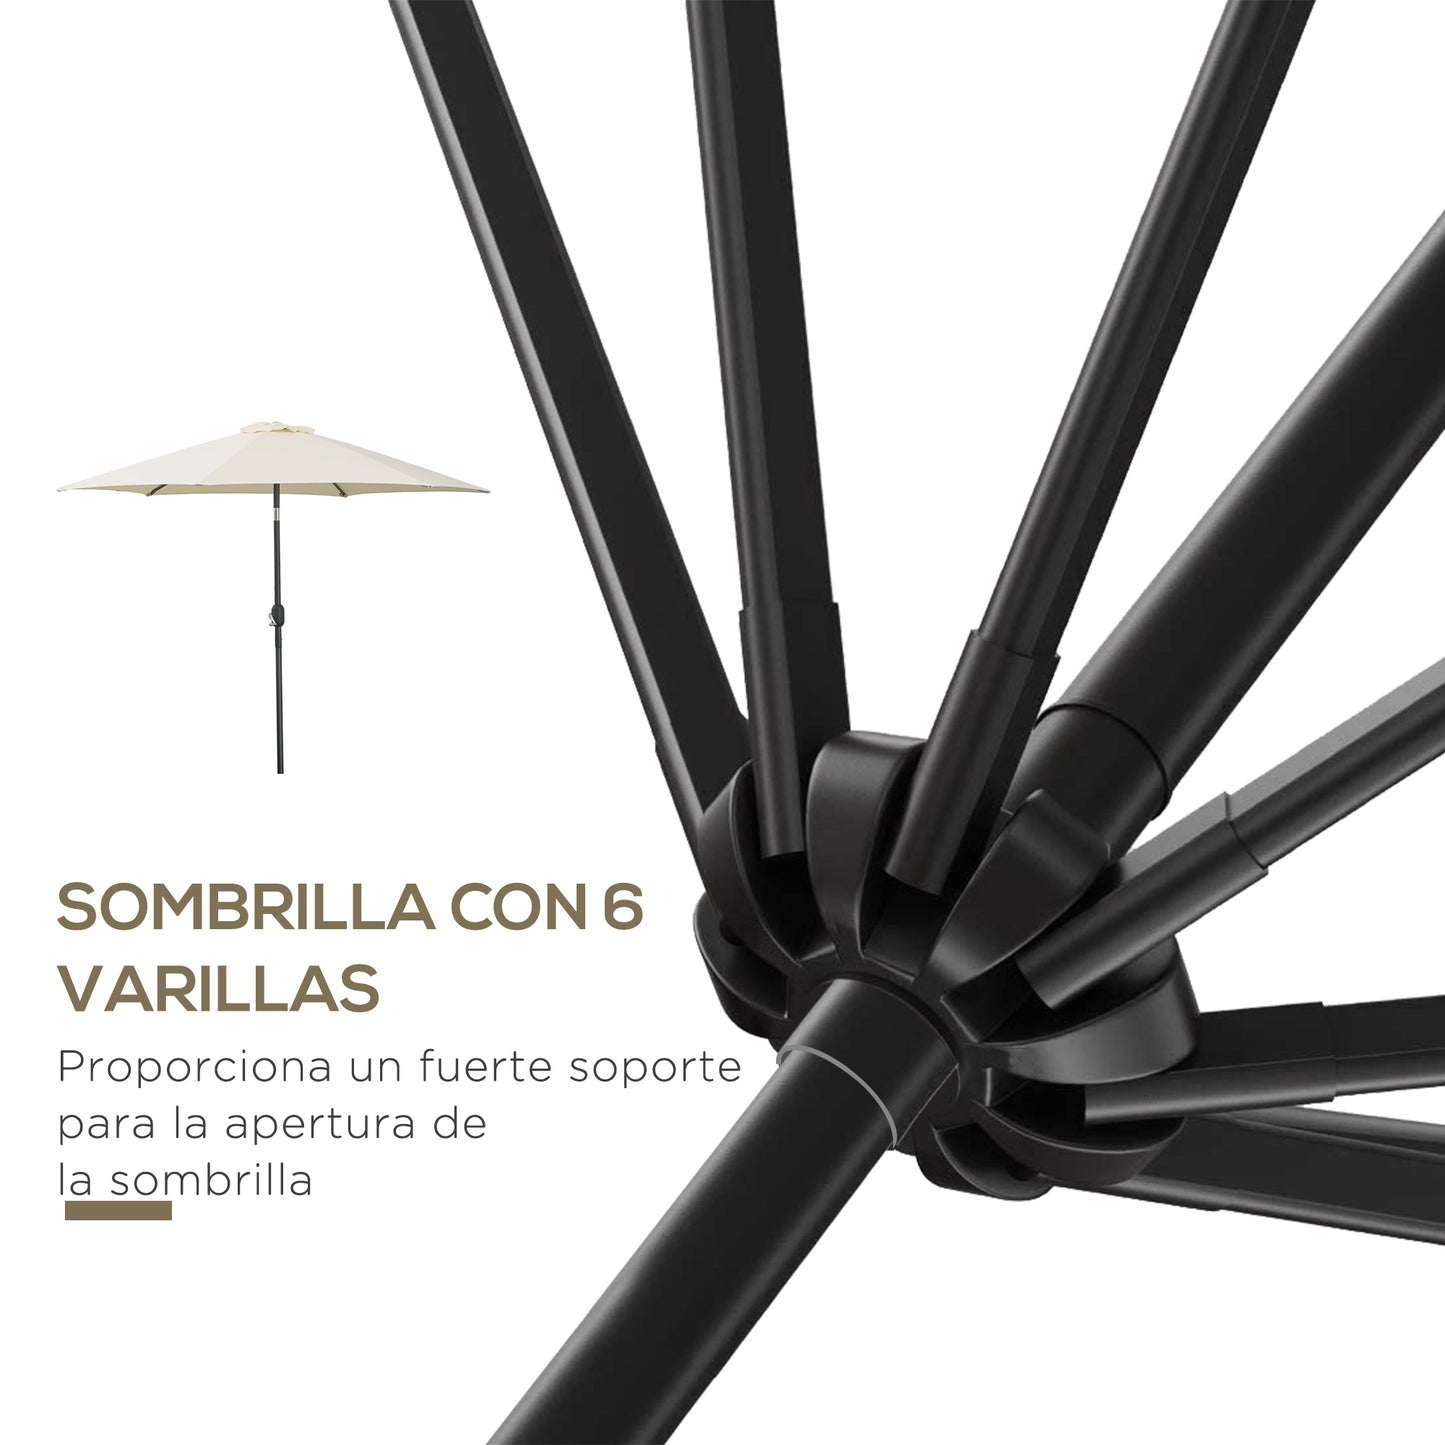 Outsunny Sombrilla para Jardín Ø260x235 cm Parasol de Aluminio con Reclinable con Manivela y 6 Varillas para Terraza Exterior Balcón Crema